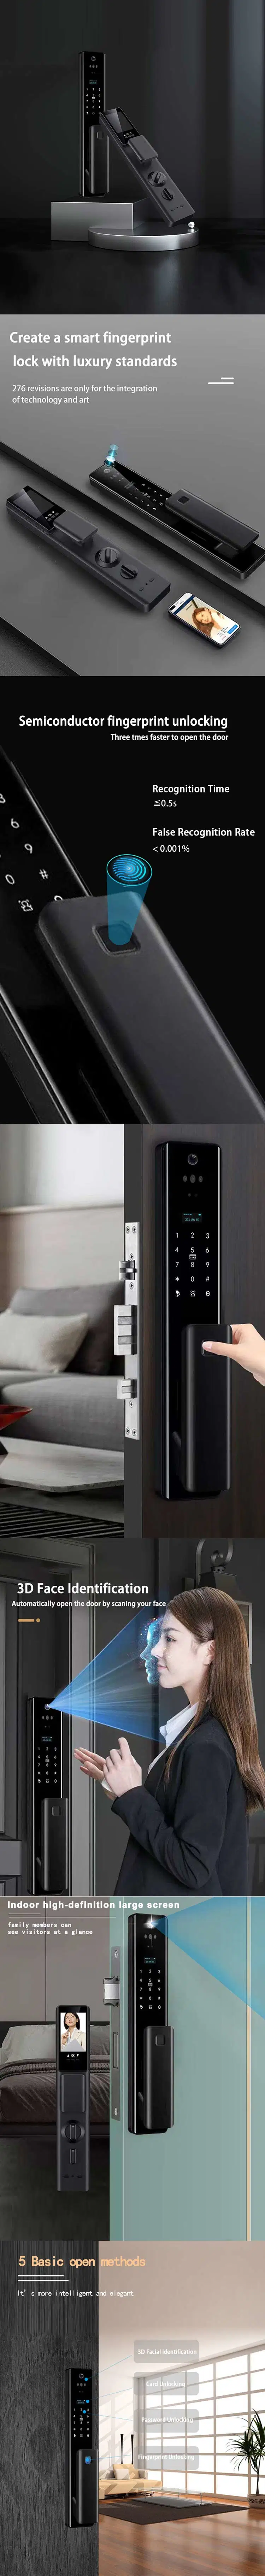 Smart Residential Door Lock Digital Remote Control Keyless Mortise Door Handle with Smart RFID Card and WiFi Tuya Smart Ttlock Apps Remote Control